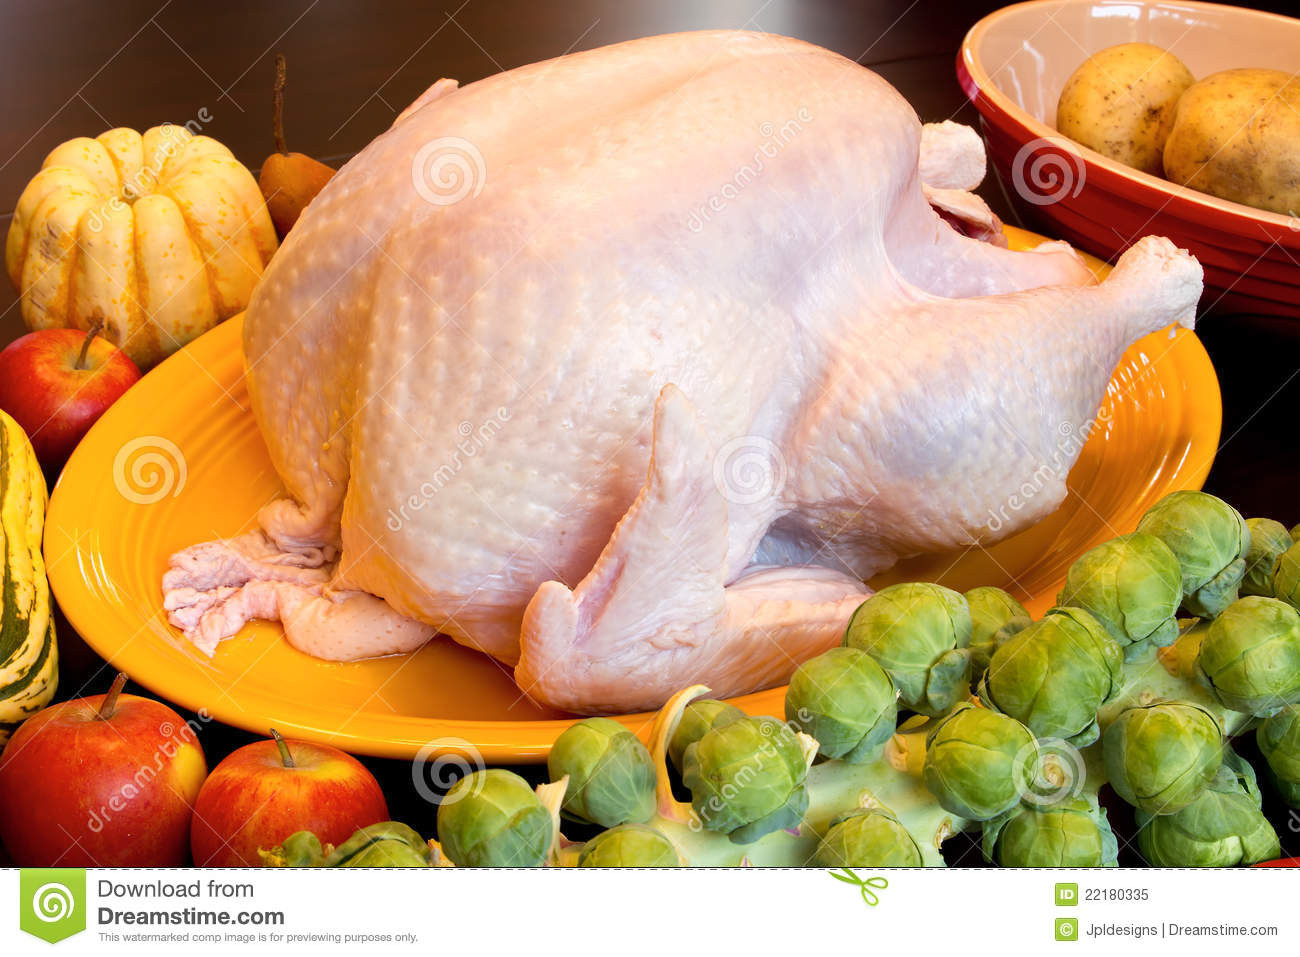 Ingredients For Thanksgiving Turkey
 Thanksgiving Turkey Dinner Cooking Ingre nts Royalty